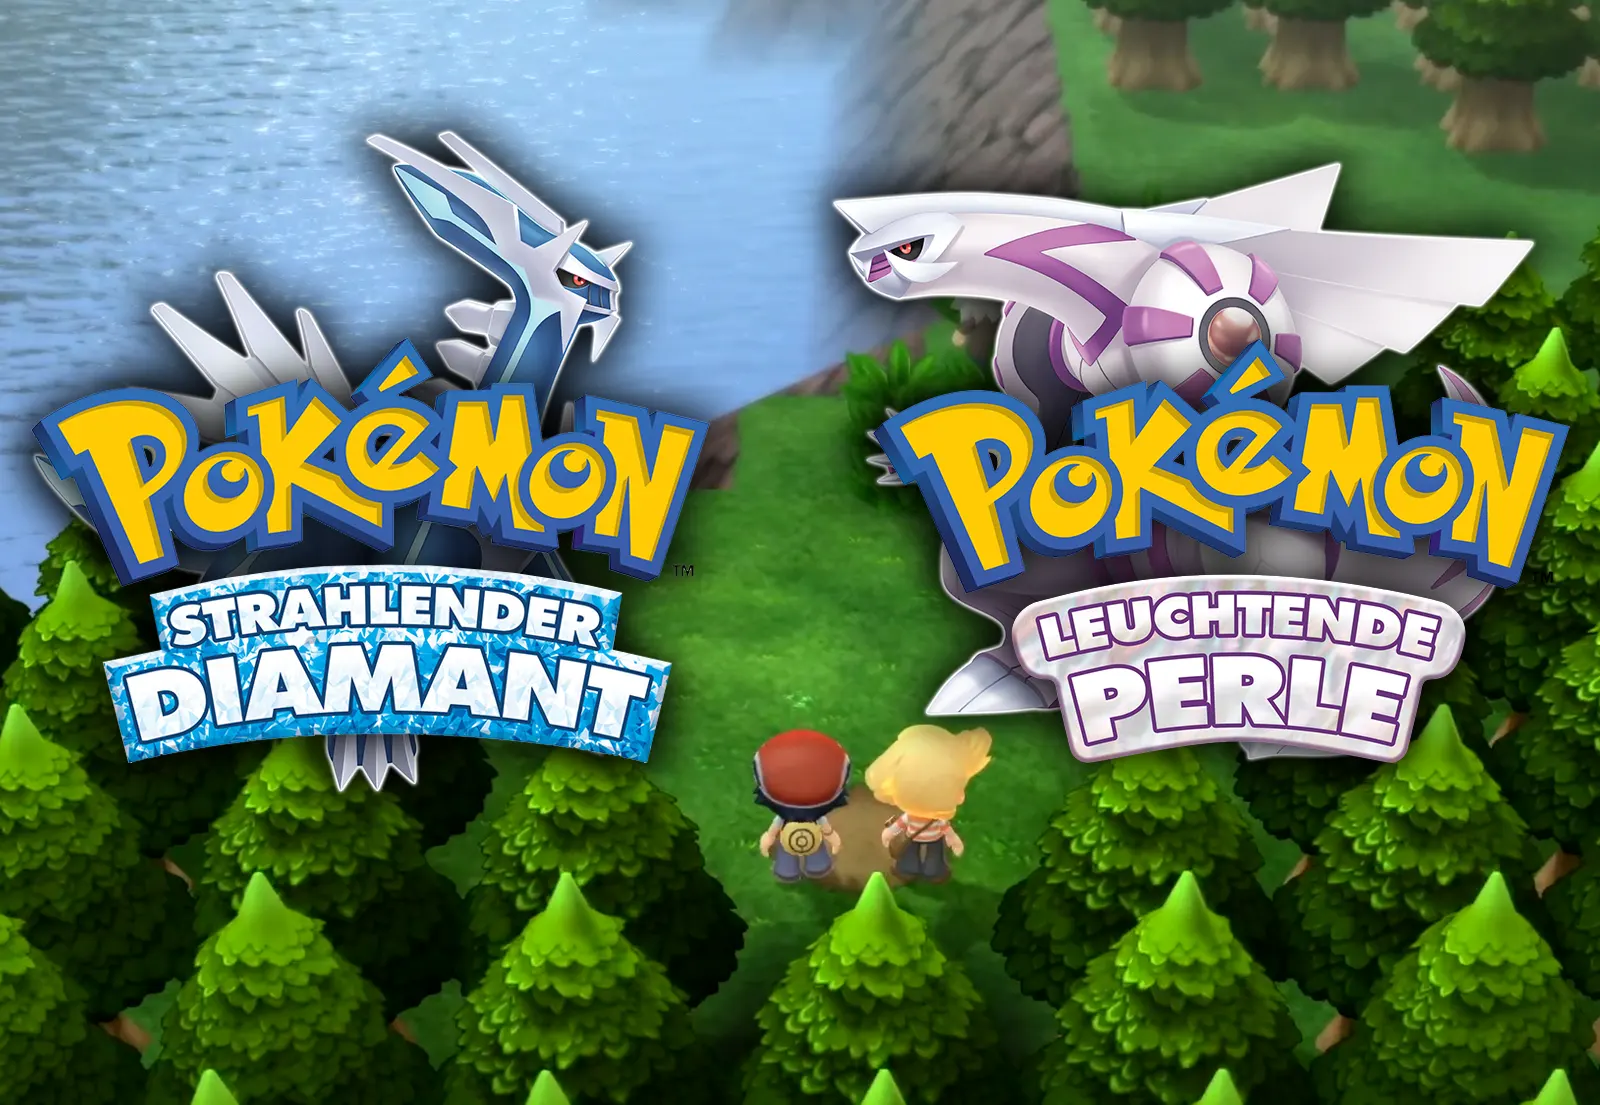 Pokémon Presents - Pokémon Diamond and Pearl Remake